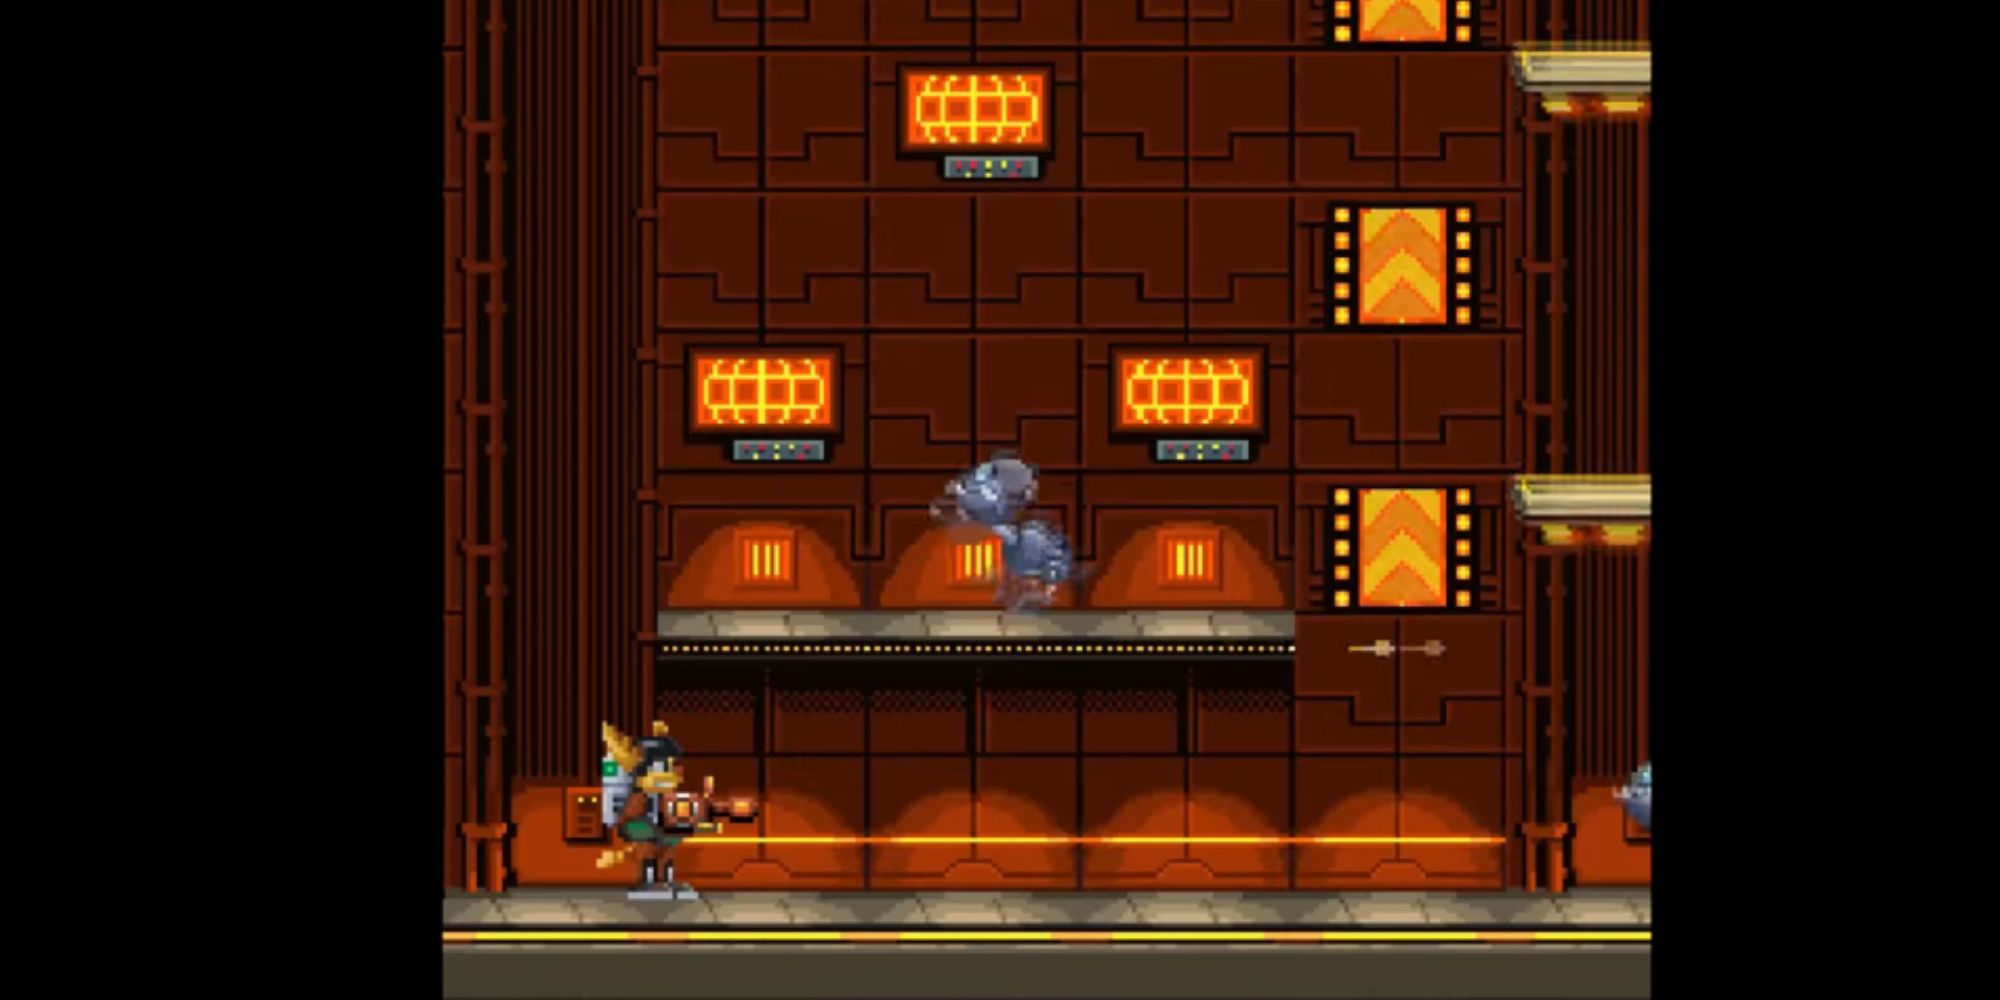 Ratchet runs through a factory full of enemies